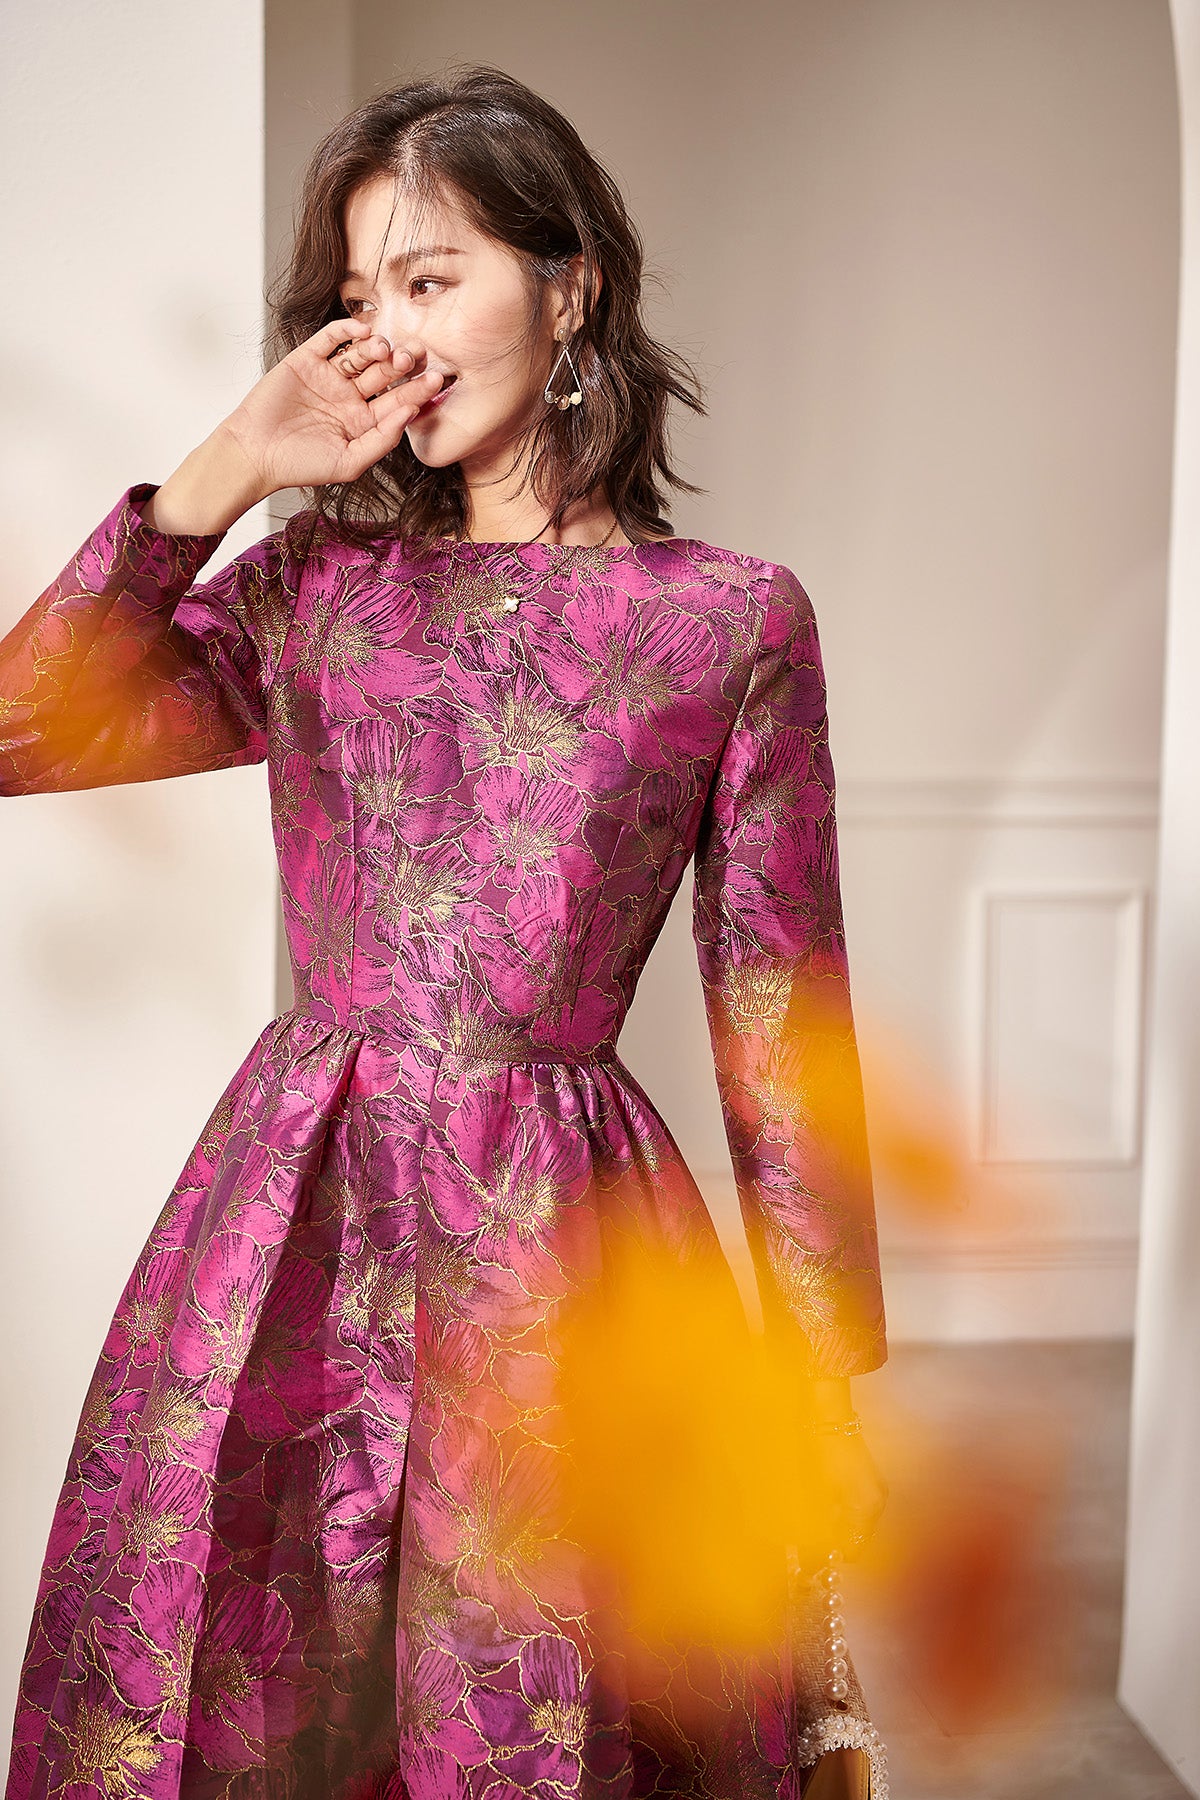 Autumn Long sleeve retro jacquard mid-length dress -Oli